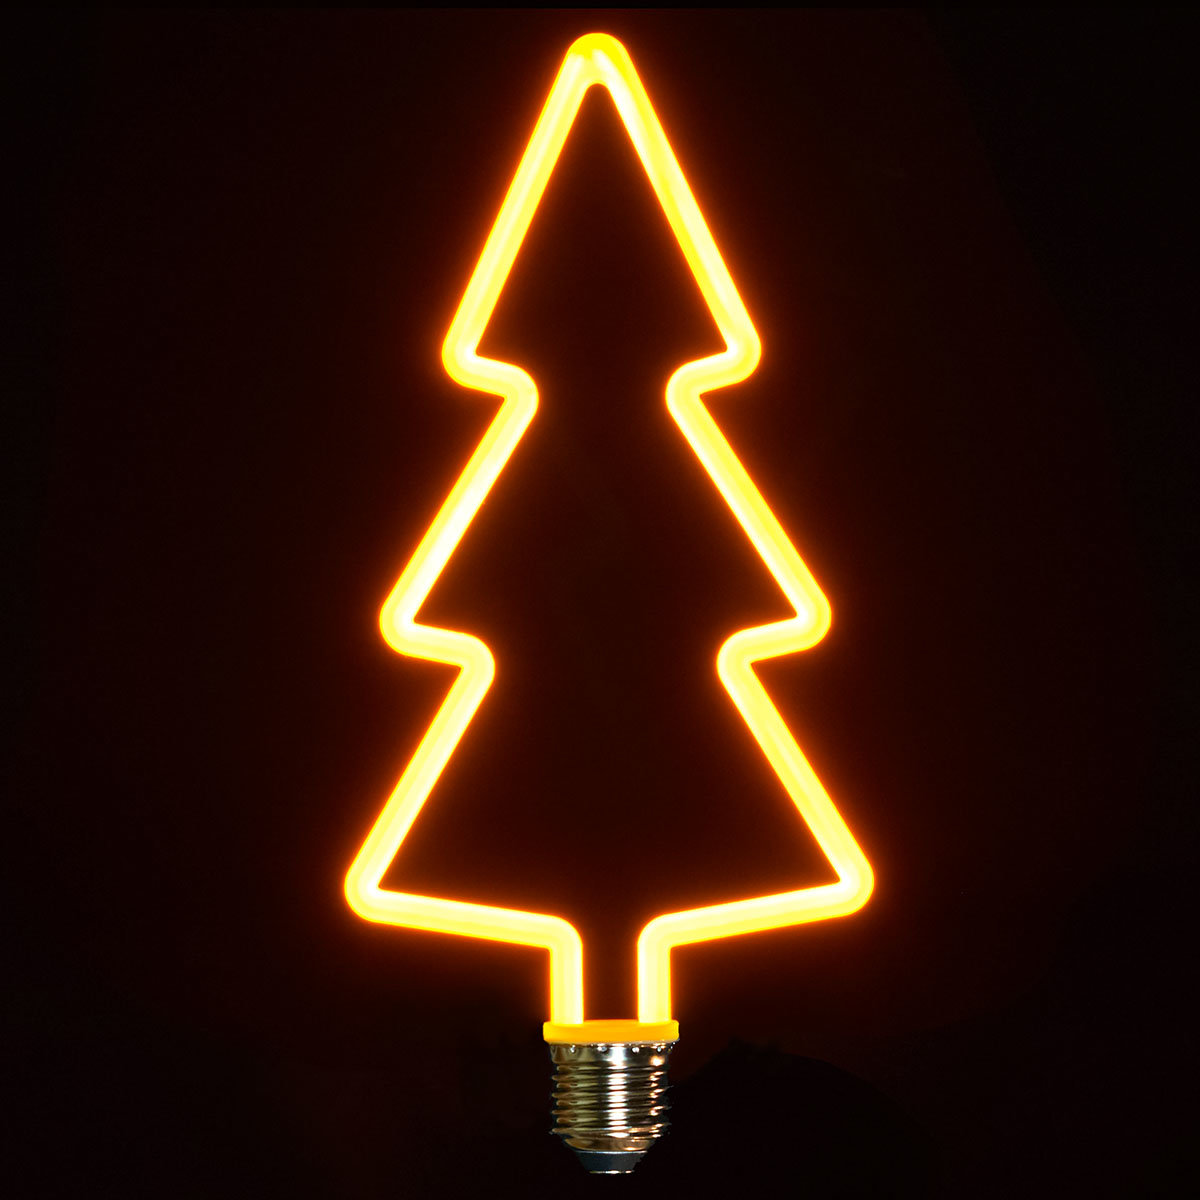 Retro LED-Dekolampe, Weihnachtsbaum, 11x24 cm dimmbar
